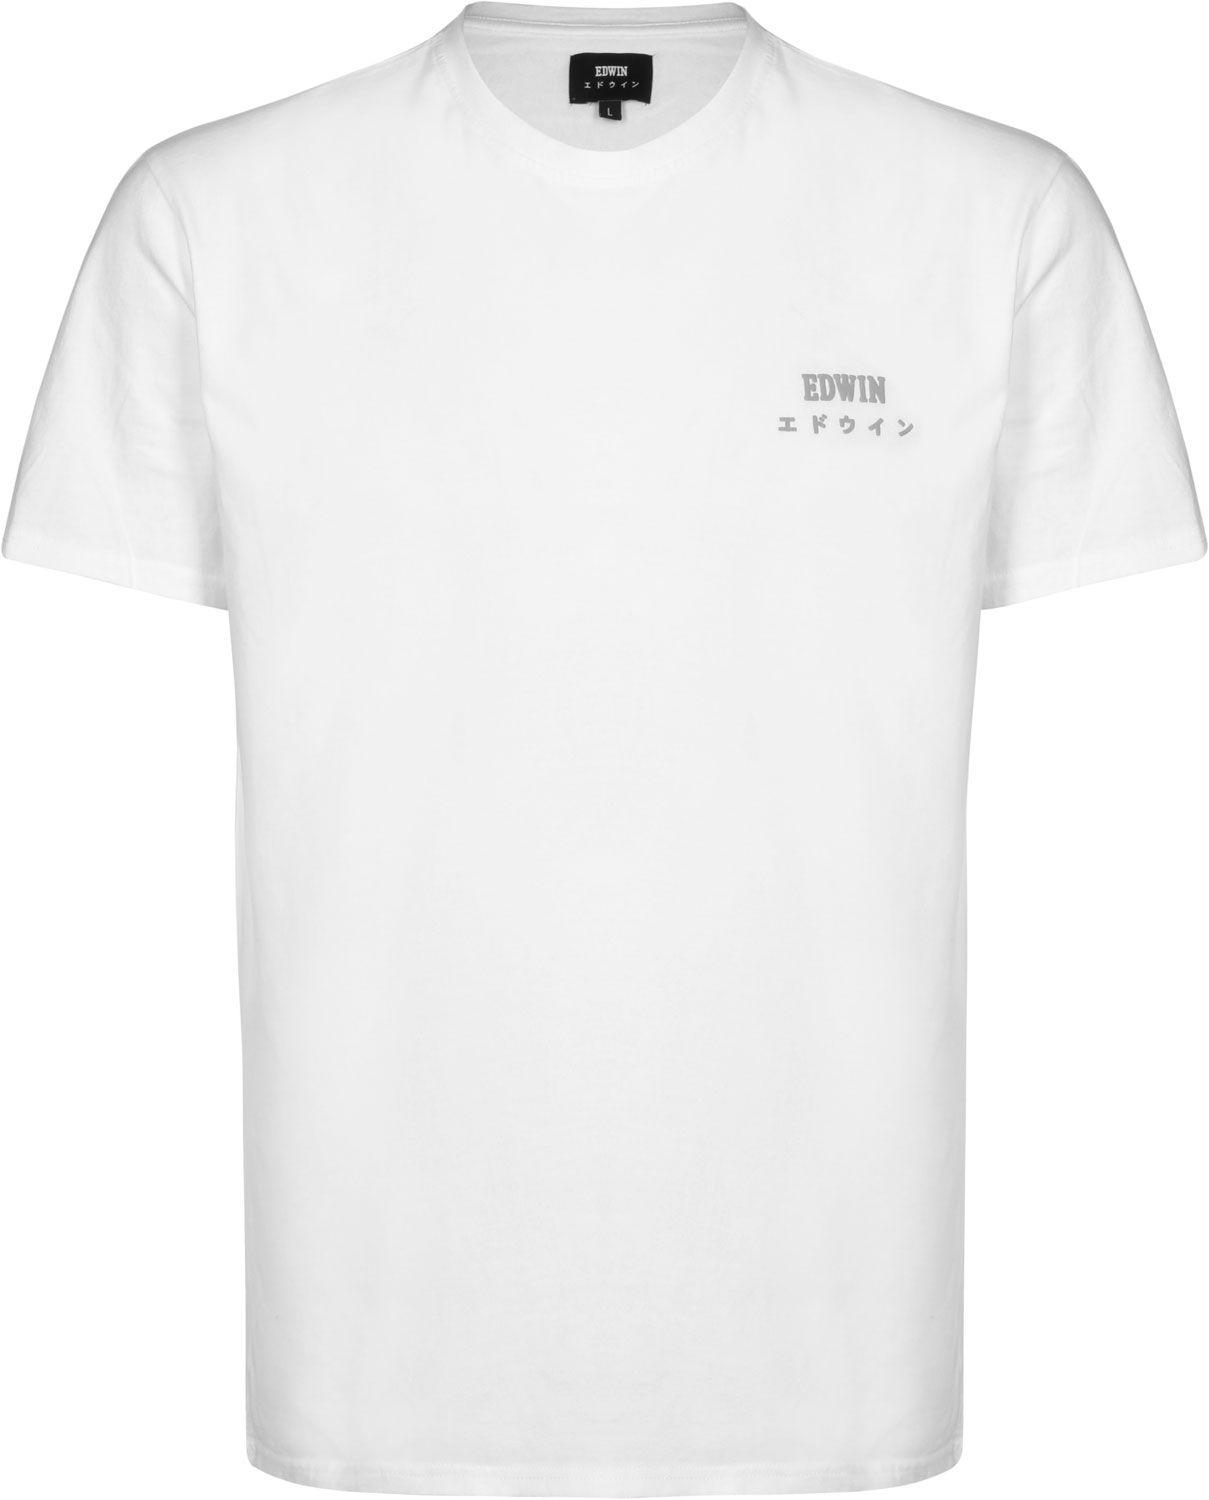 Edwin Logo - Edwin Logo Chest T Shirt White